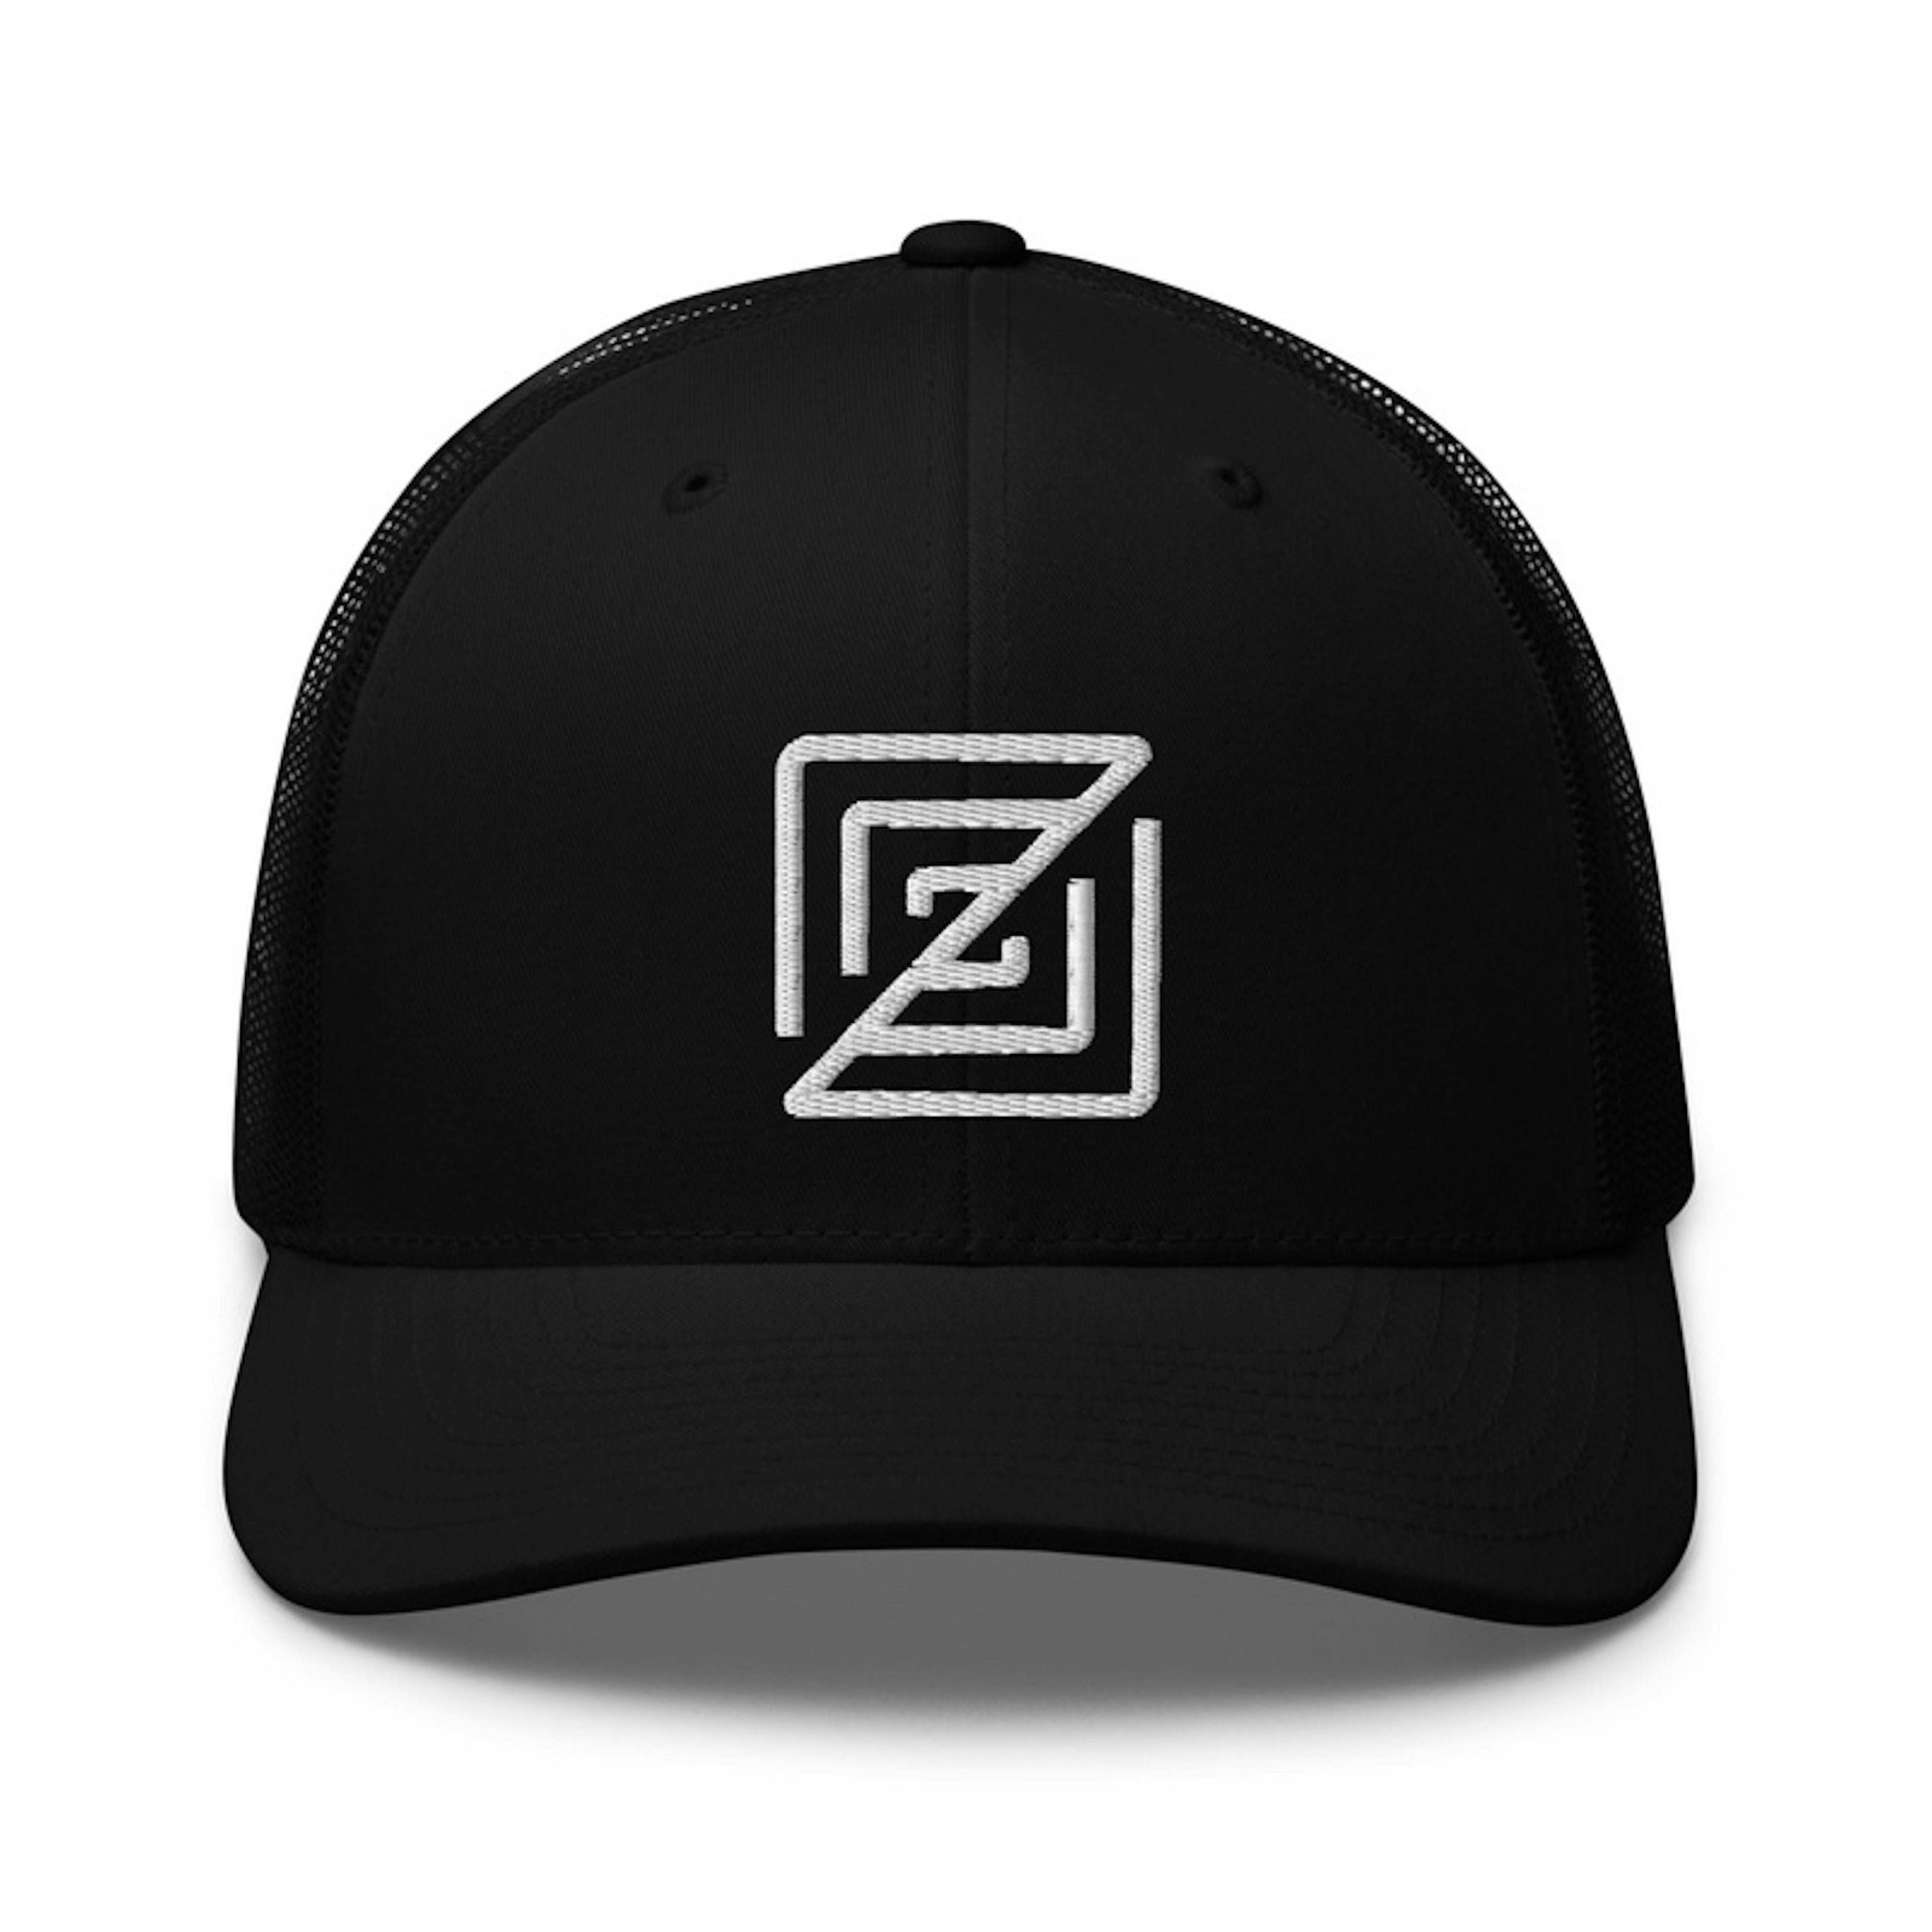 Zed Black Trucker Hat with White Logo